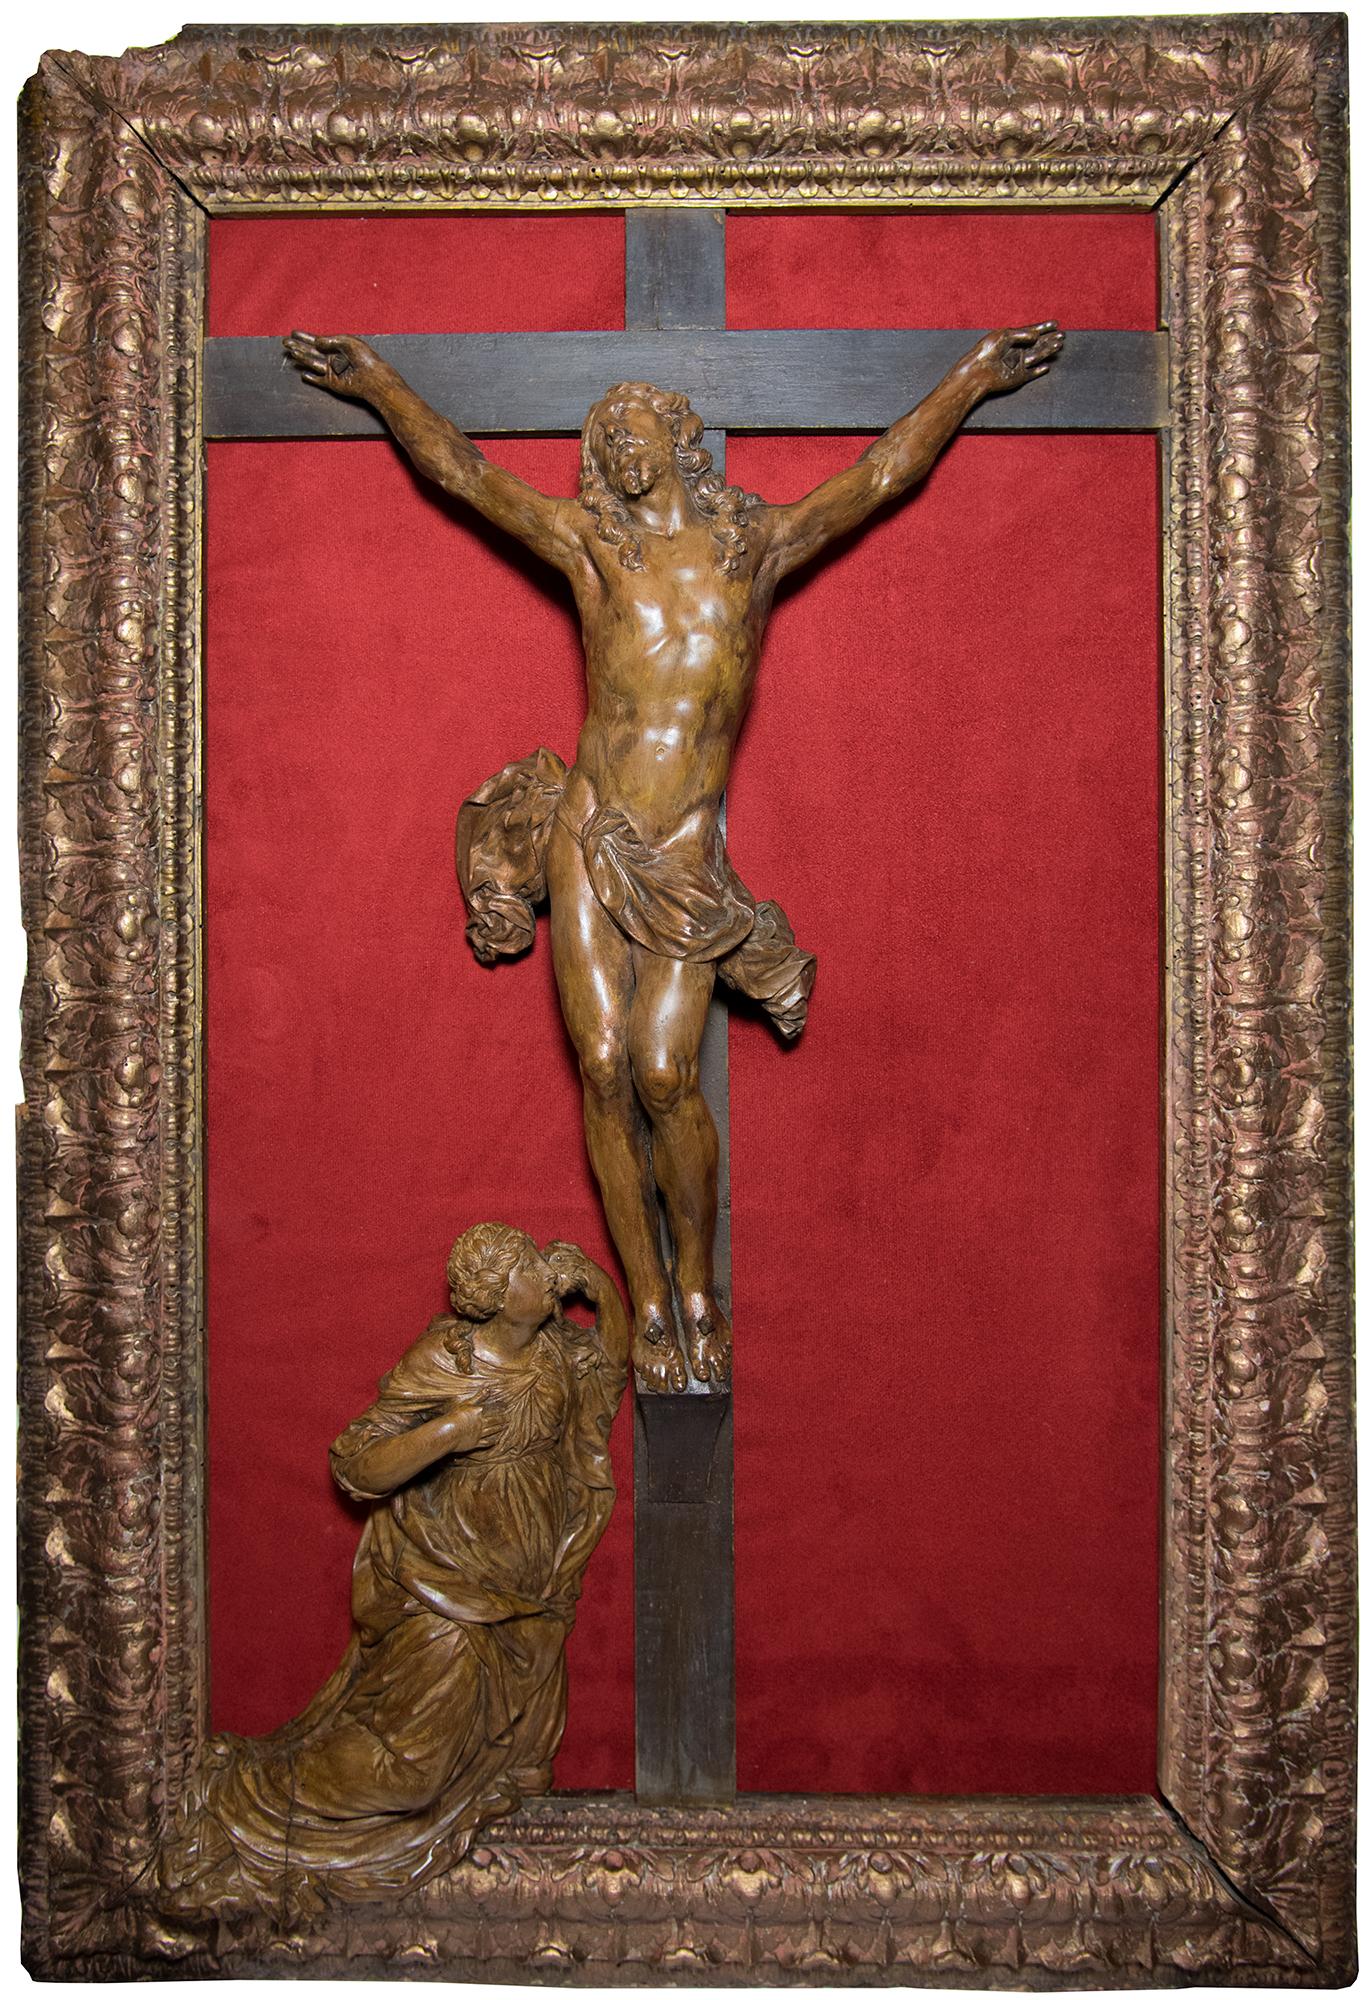 César BAGARD Figurative Sculpture - Large framed Christ, late 17th century, César Bagard and workshop